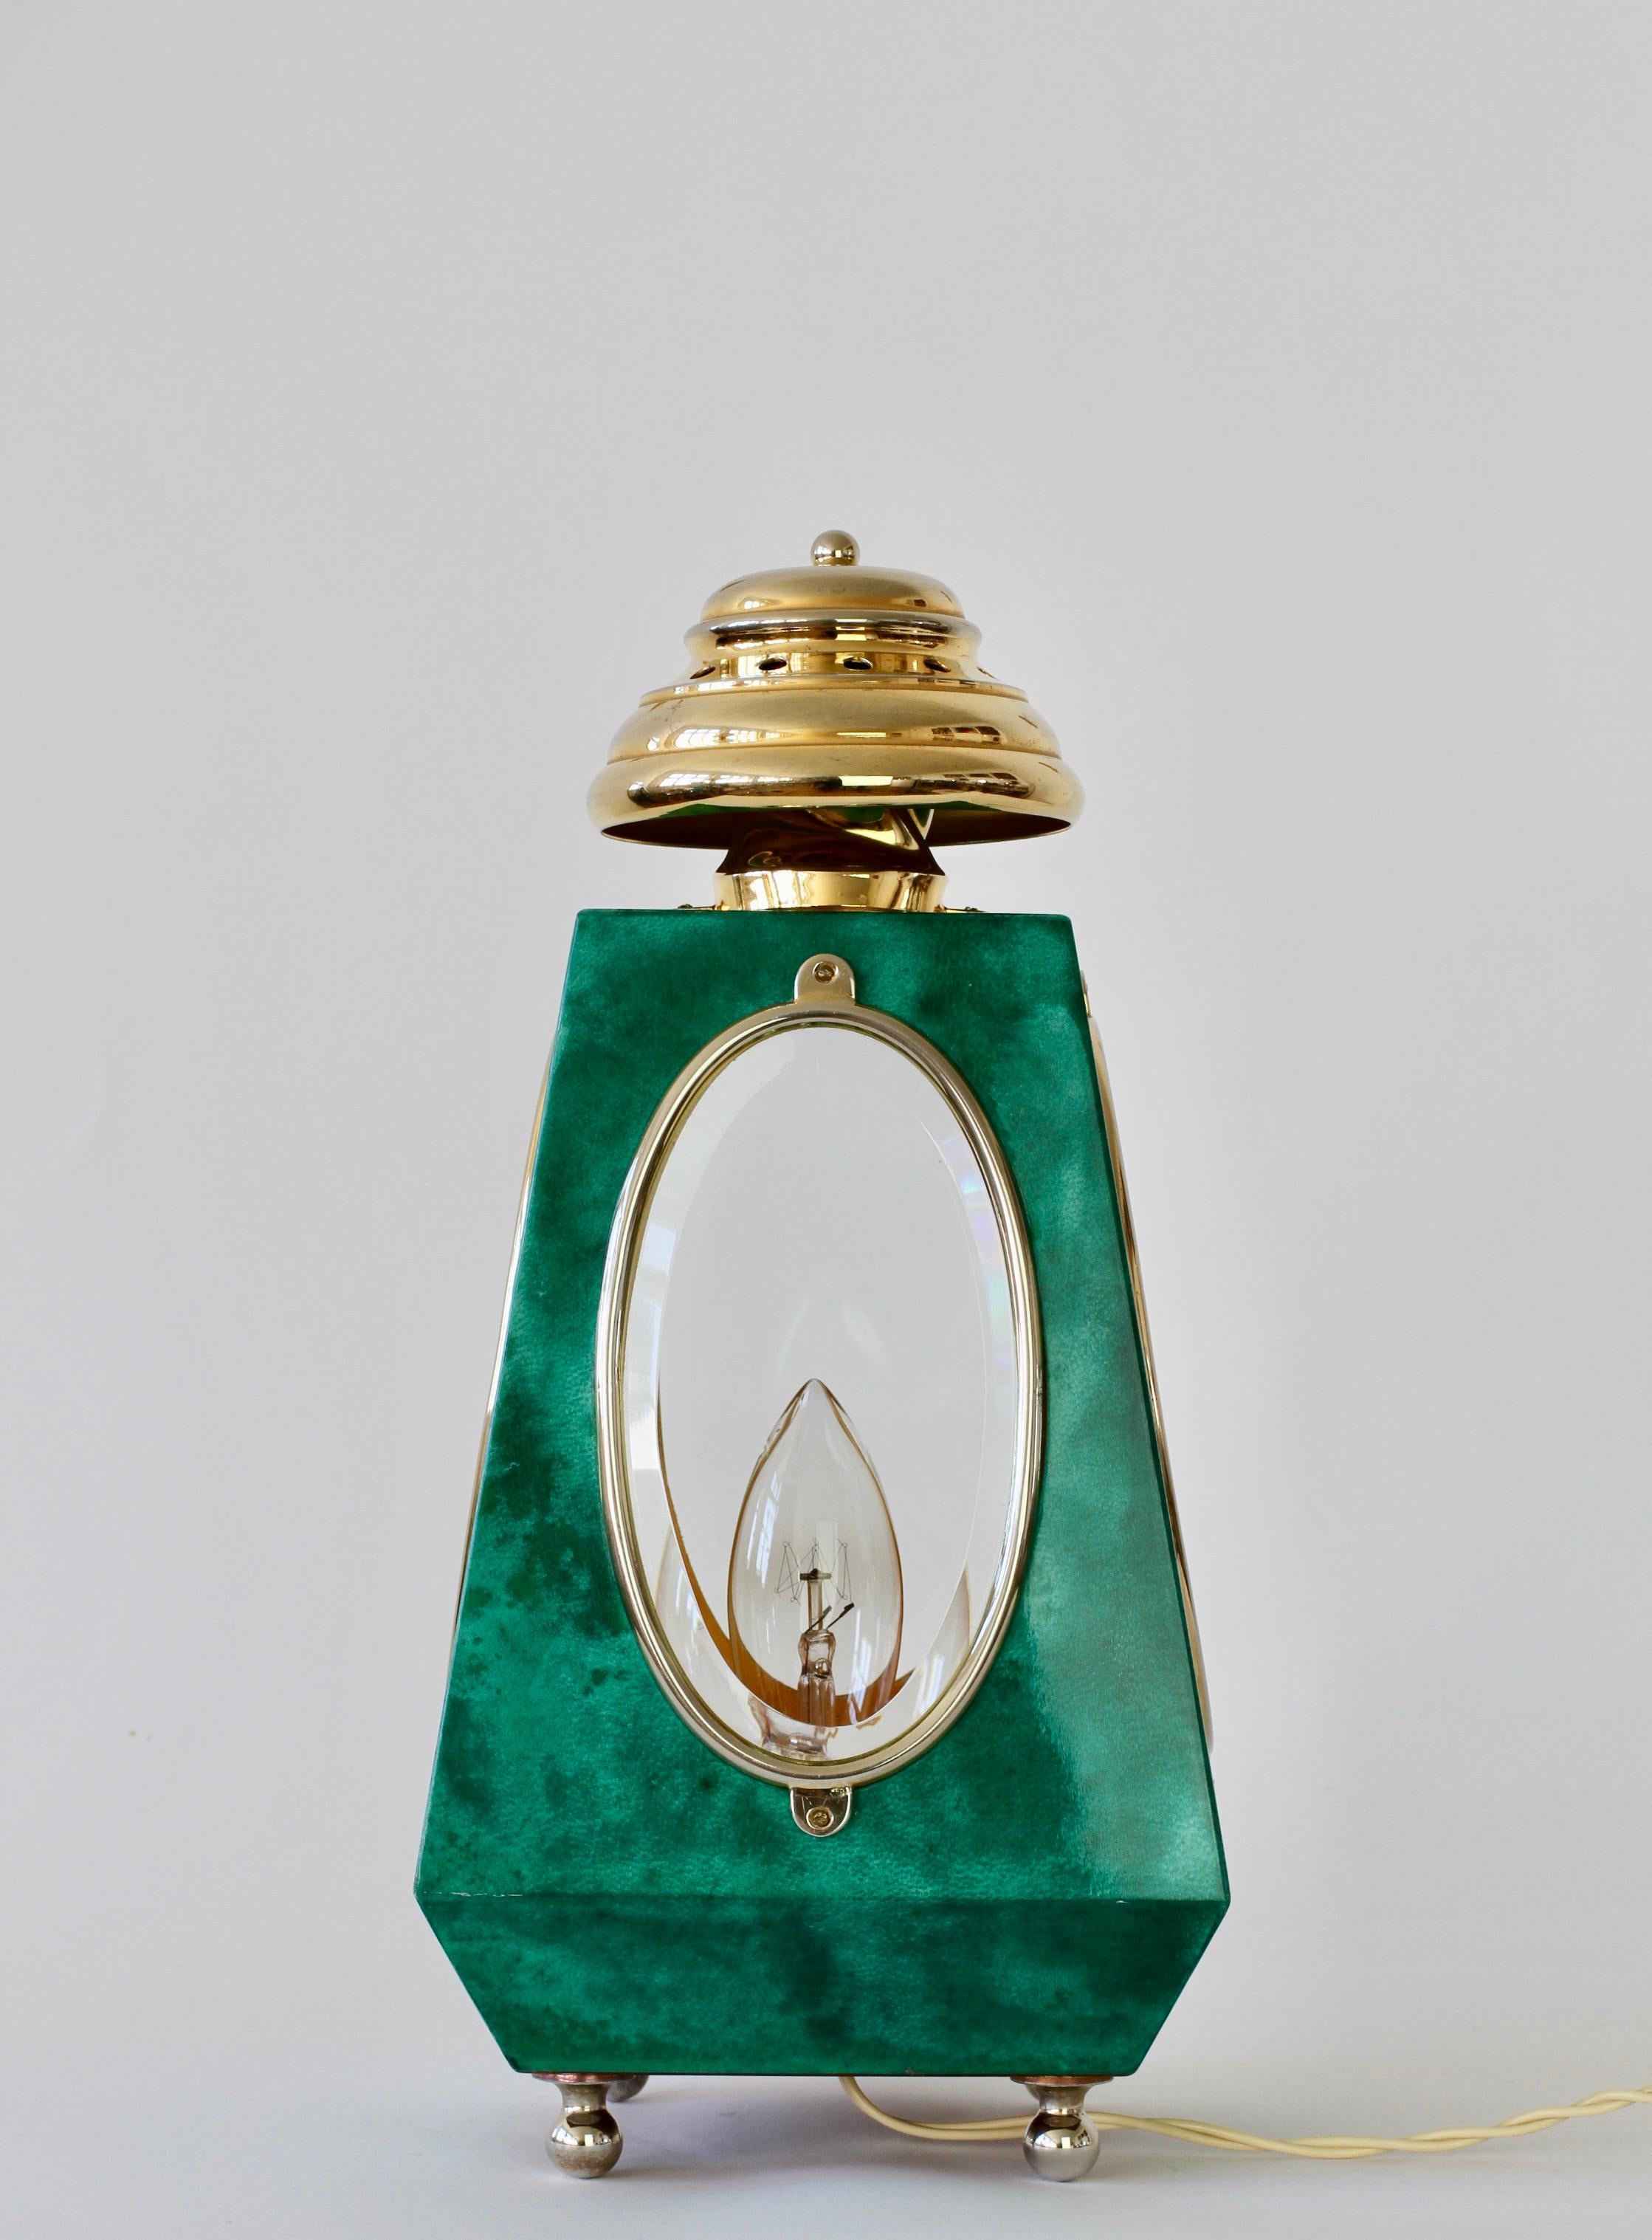 Aldo Tura 1960s Midcentury Table Lamp / Lantern in Green Italian Goatskin 3